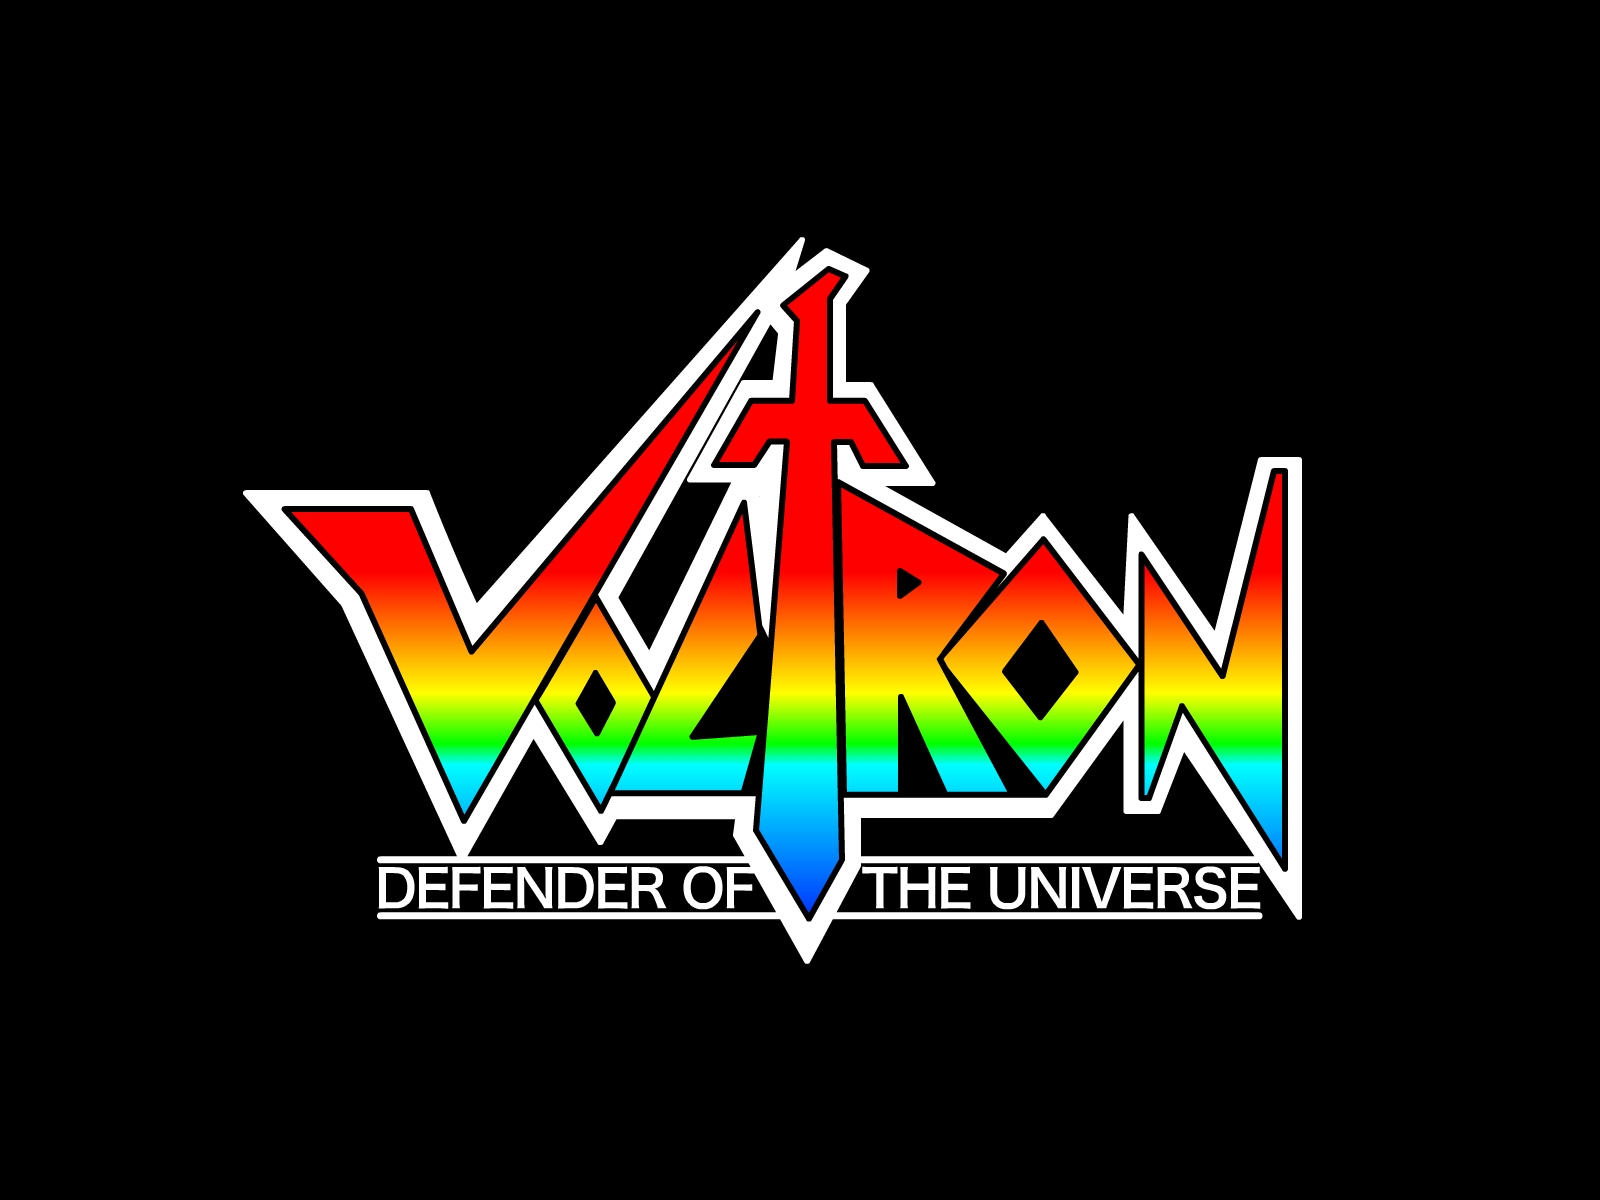 final-voltron-logo-by-deuceventure-on-deviantart